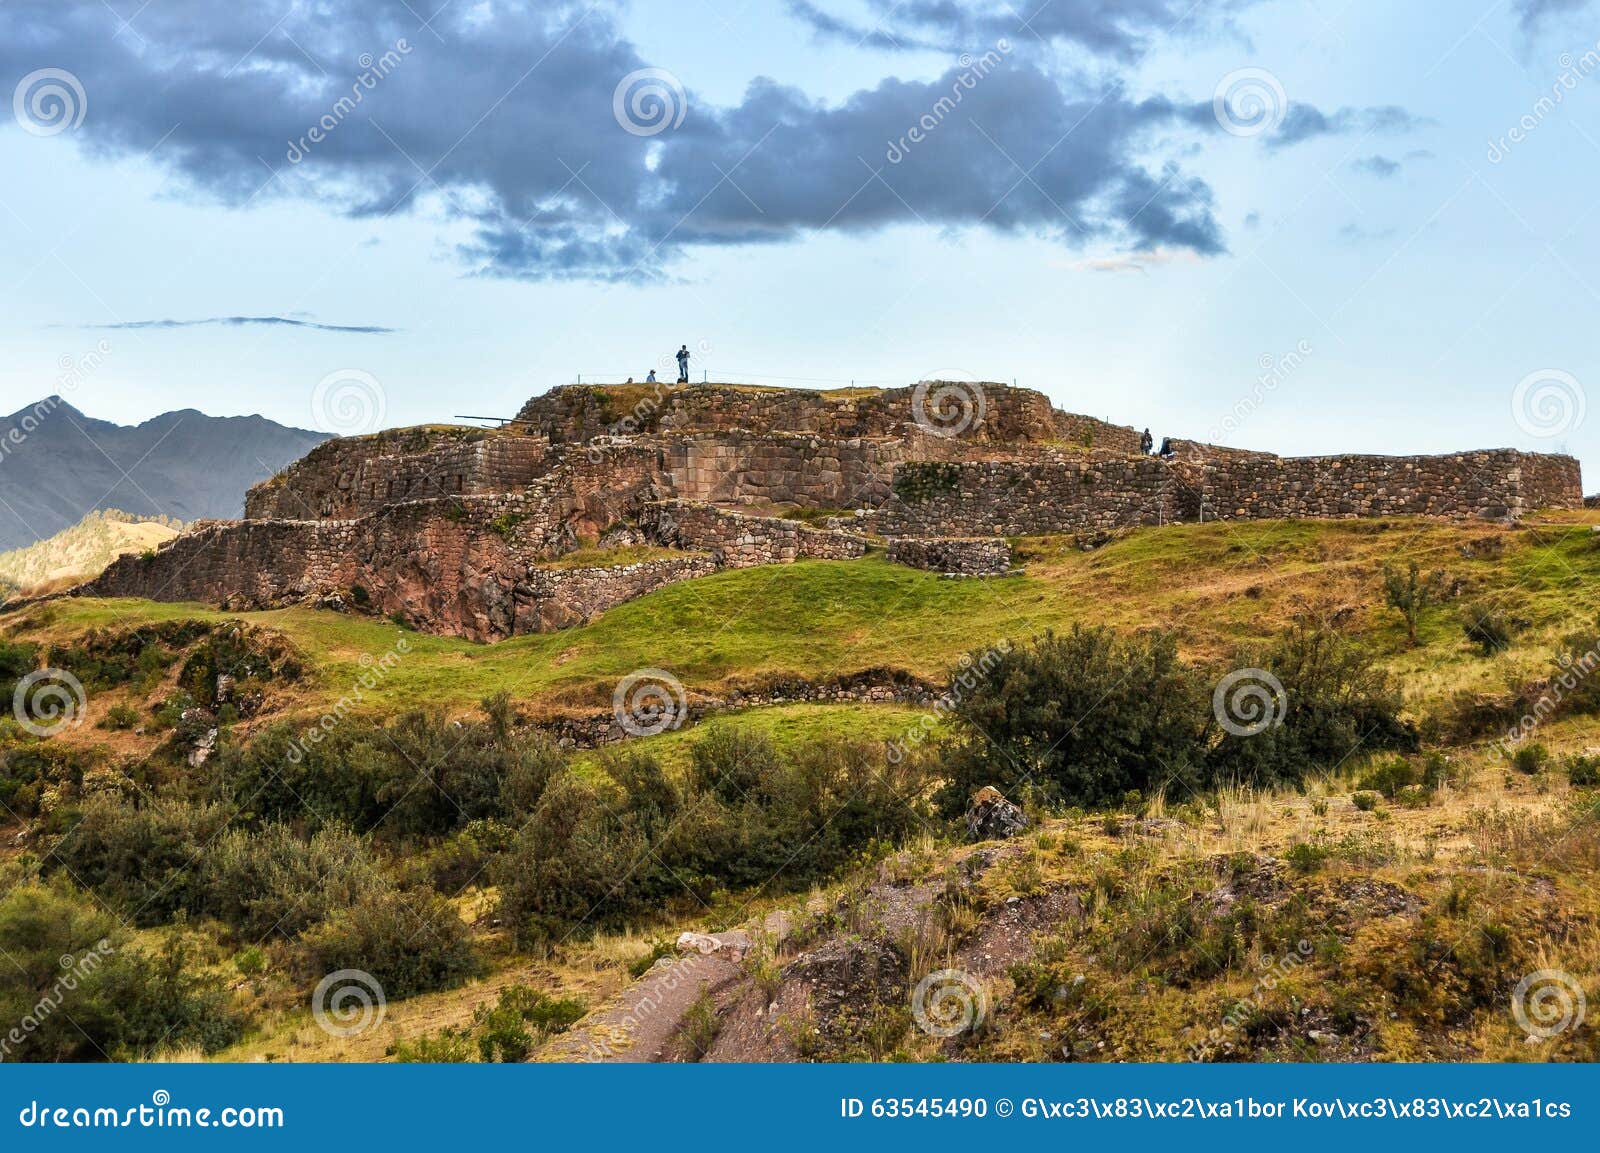 view of the ruins of the fortress of puka pukara in cusco, peru